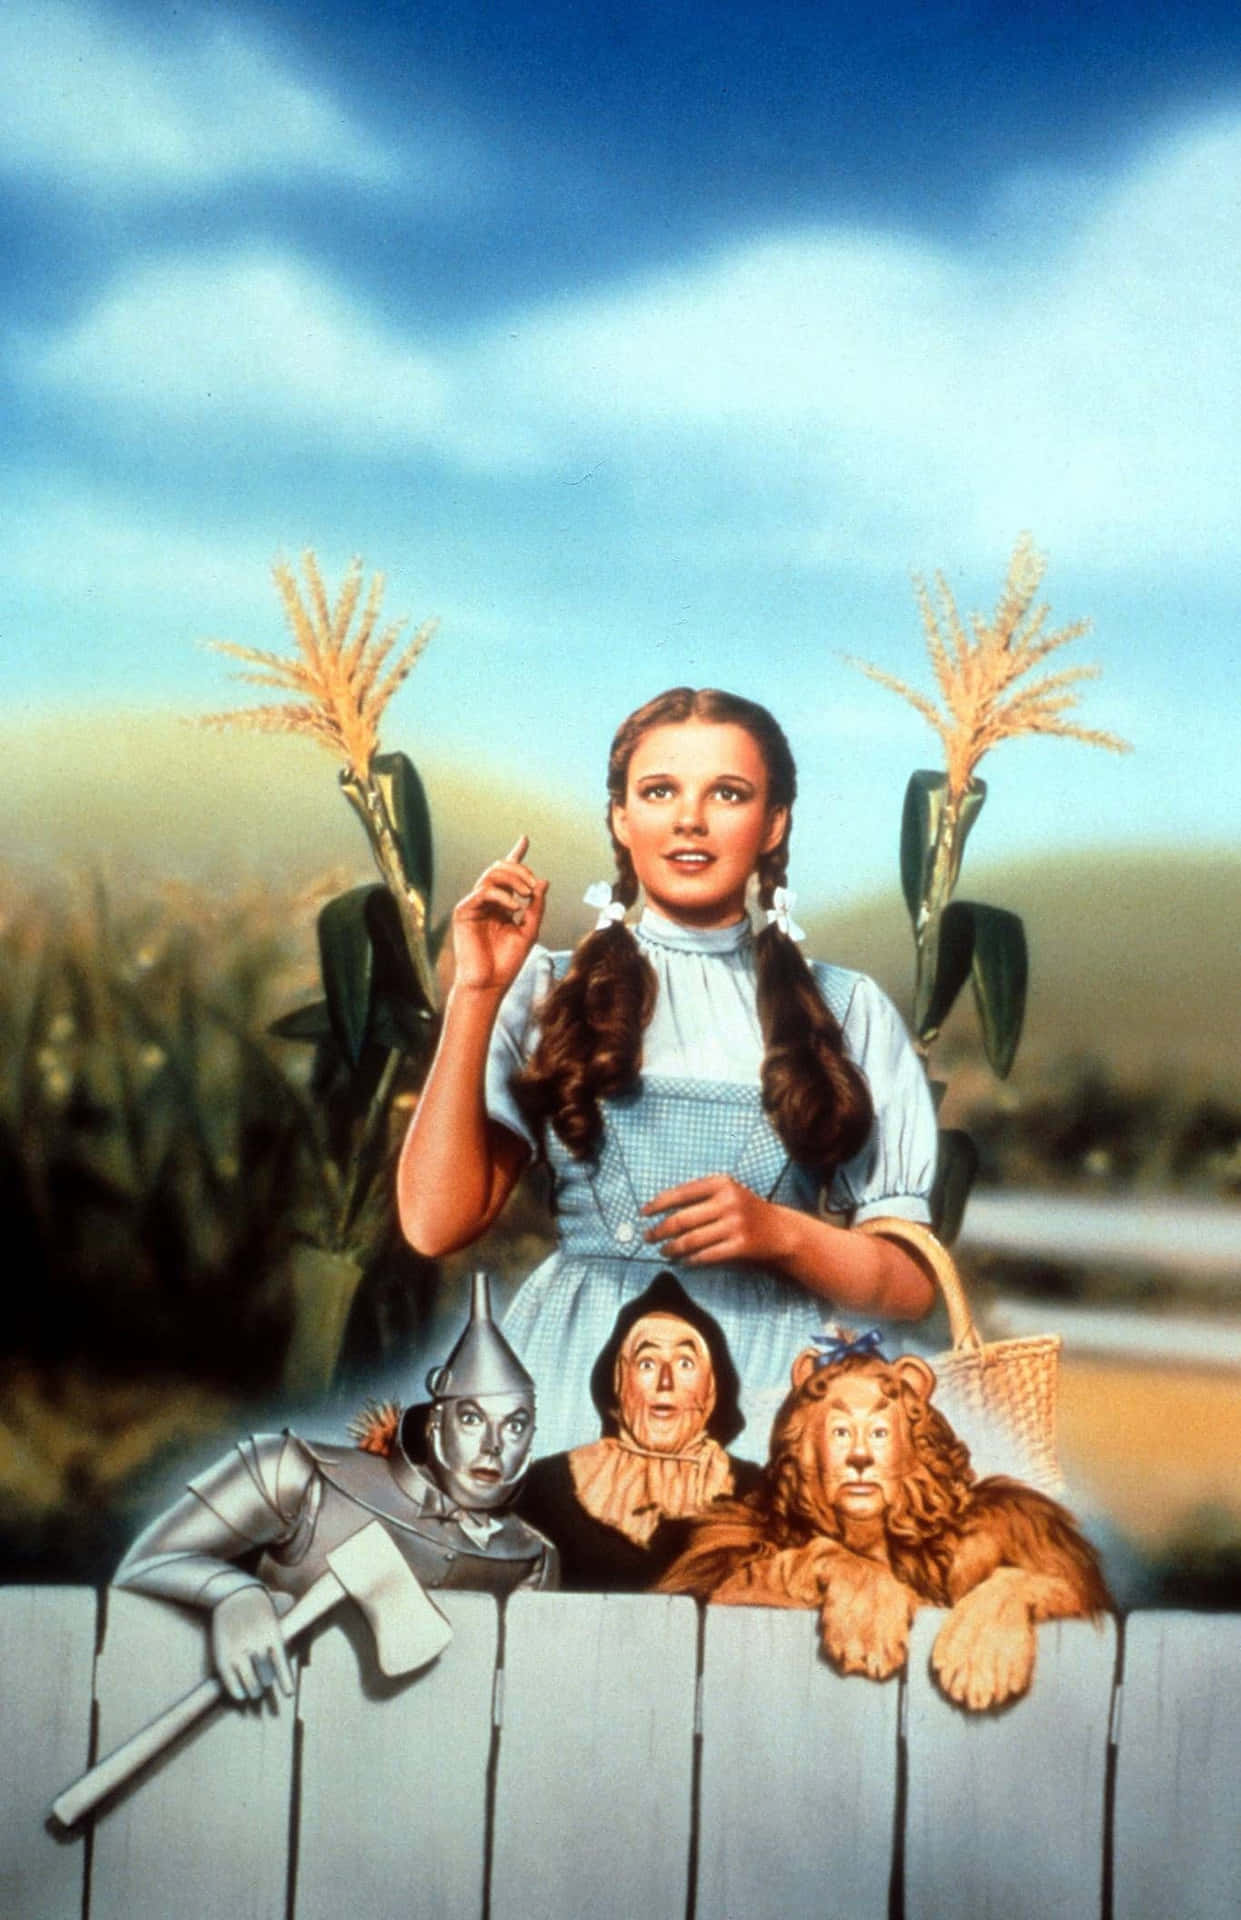 Dorothye Seus Amigos Seguem A Estrada De Tijolos Amarelos Para Oz. Papel de Parede